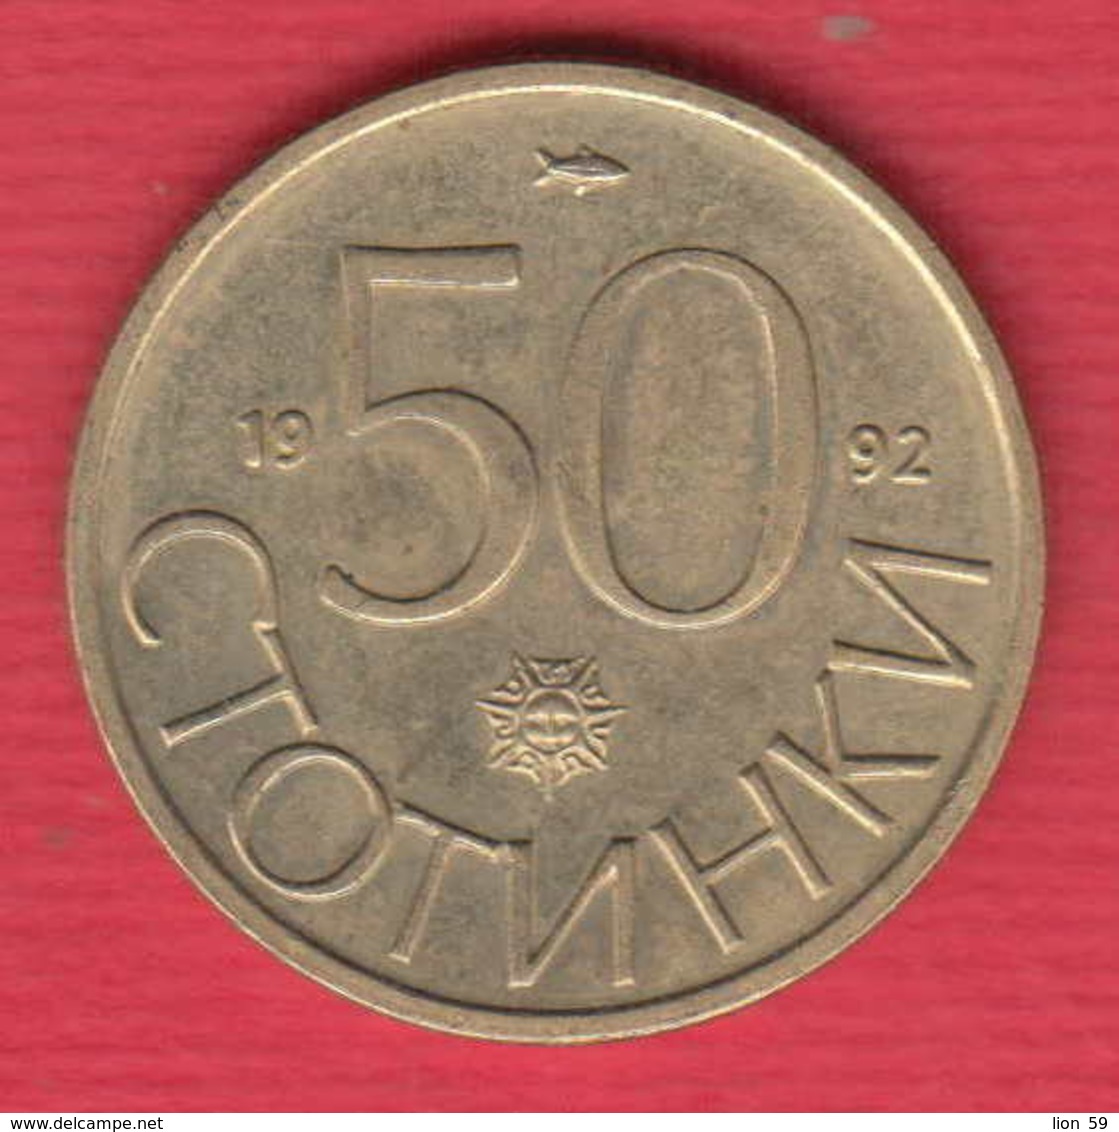 F7515 / - 50 Stotinki - 1992 - Bulgaria Bulgarie Bulgarien Bulgarije FISH SUN ANIMAL LION , Coins Monnaies Munzen - Bulgaria